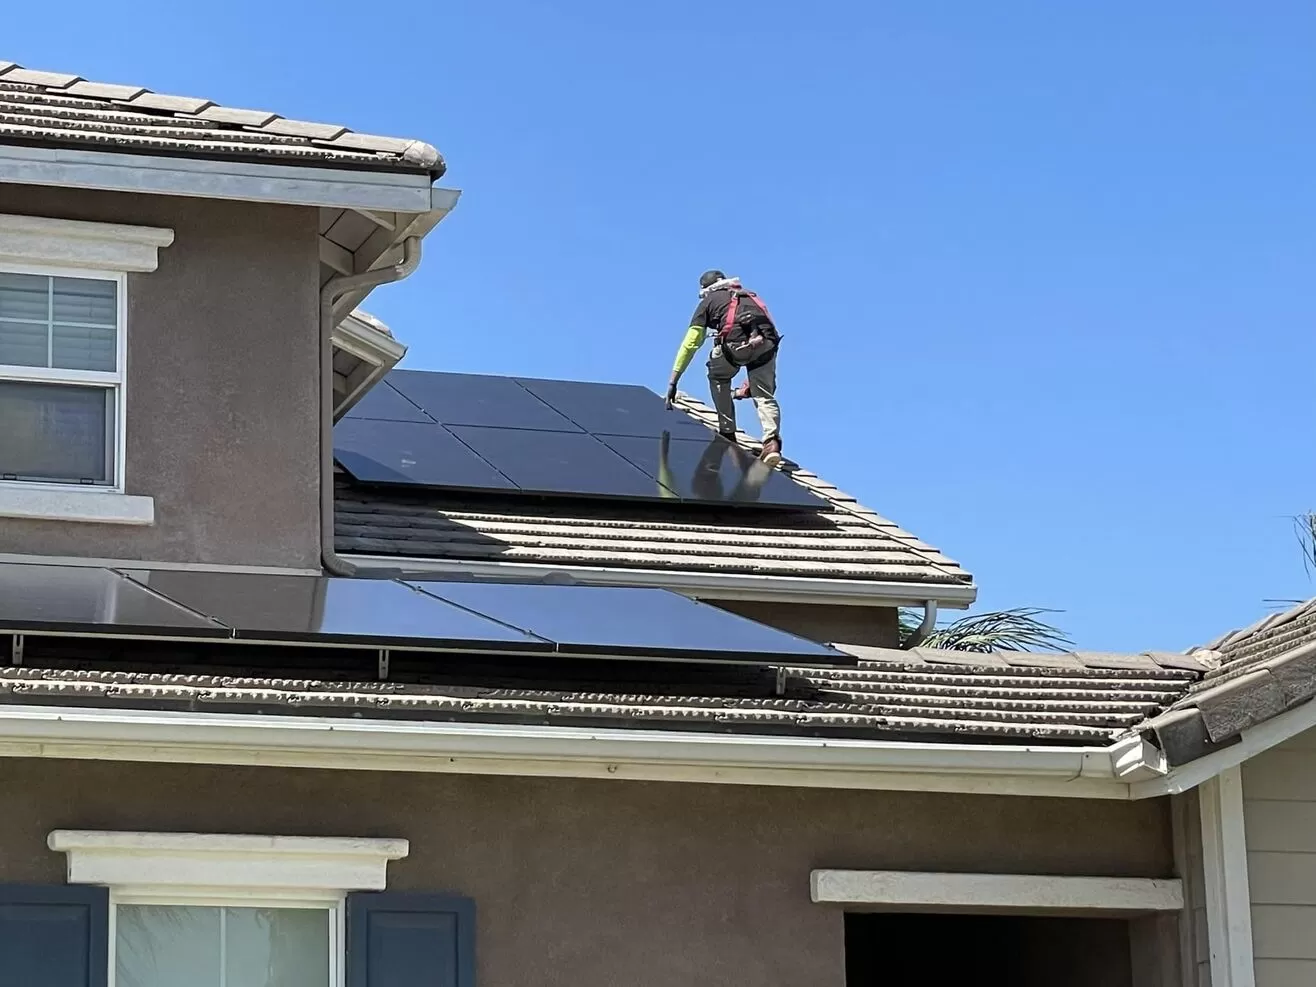 empresas de placas solares - Paneles Solares West Miami